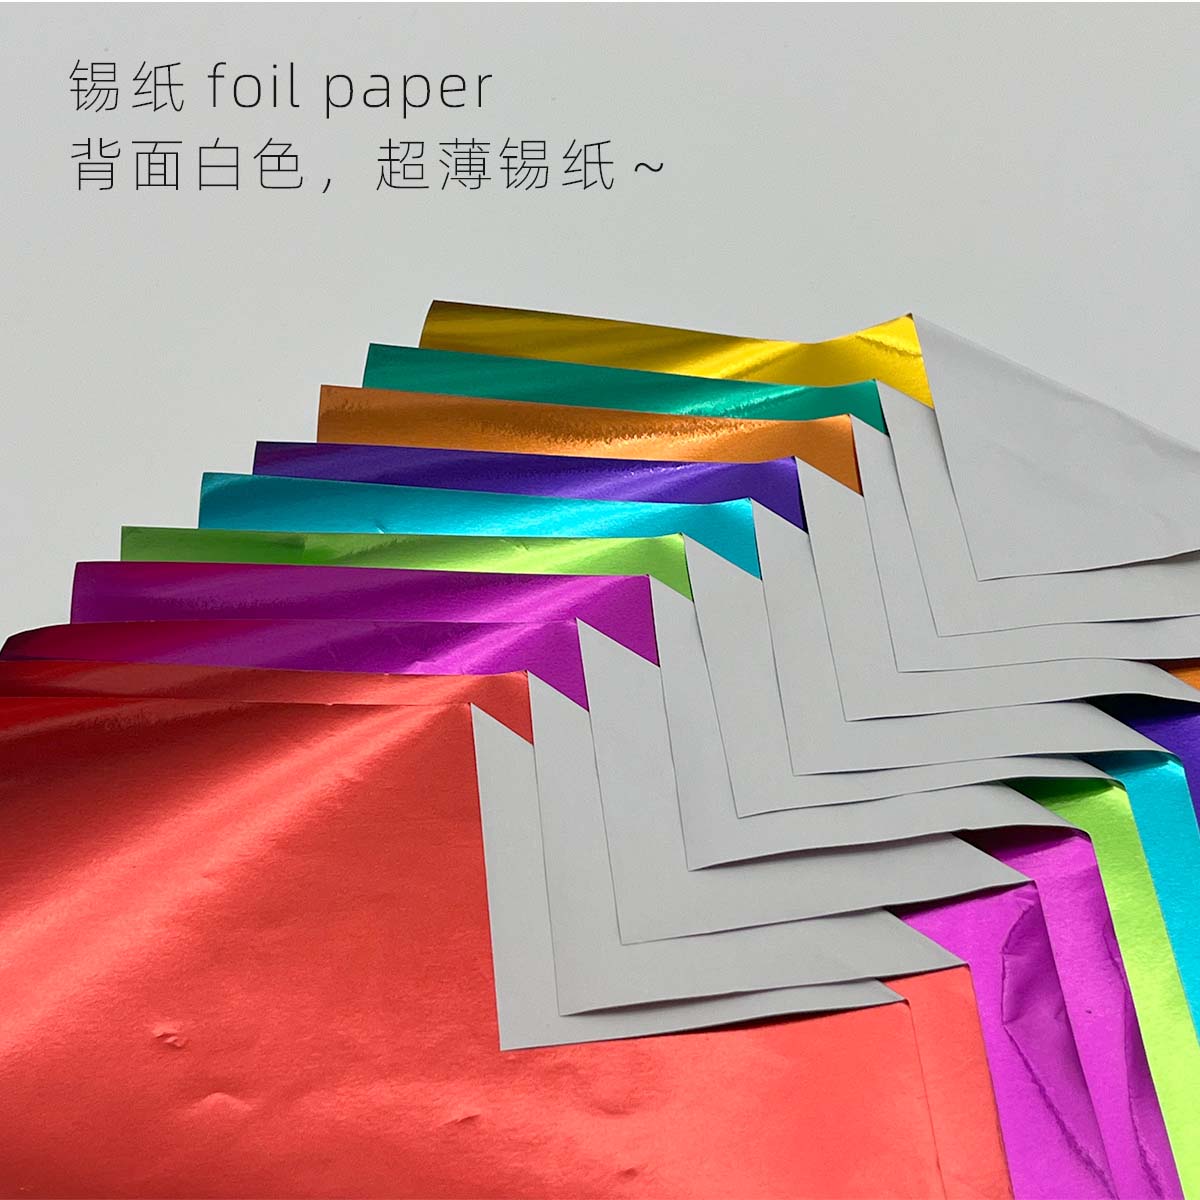 Japan foil paper KOMA